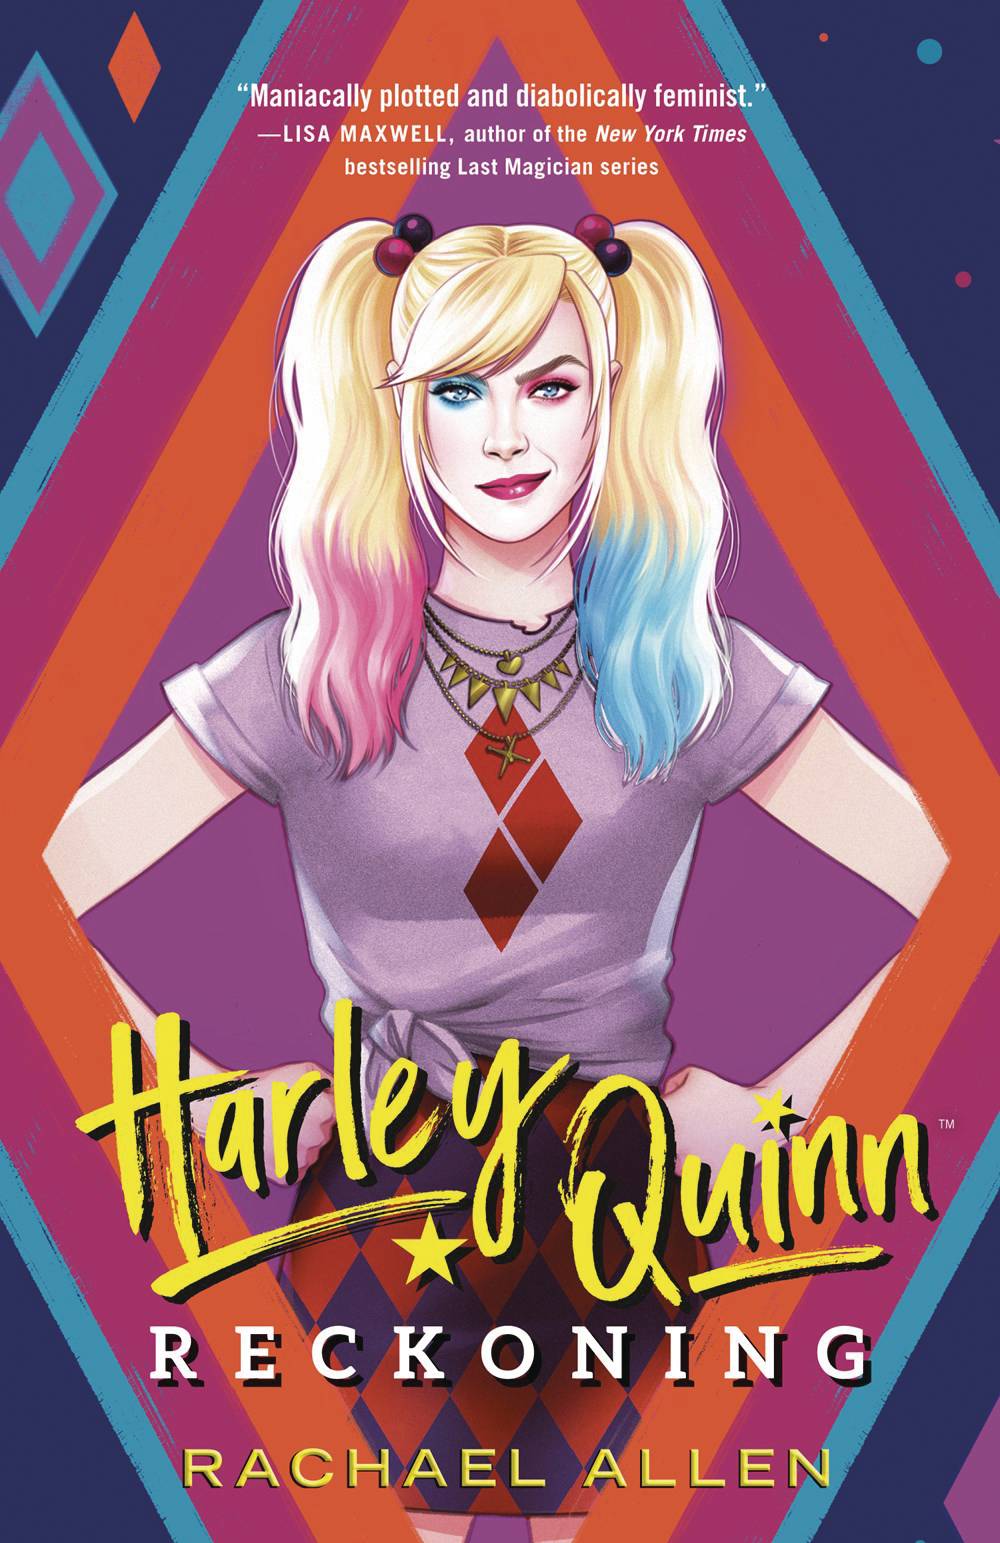 Harley Quinn Reckoning Hc Novel (C: 0-1-1) (04/27/2022) - State of Comics